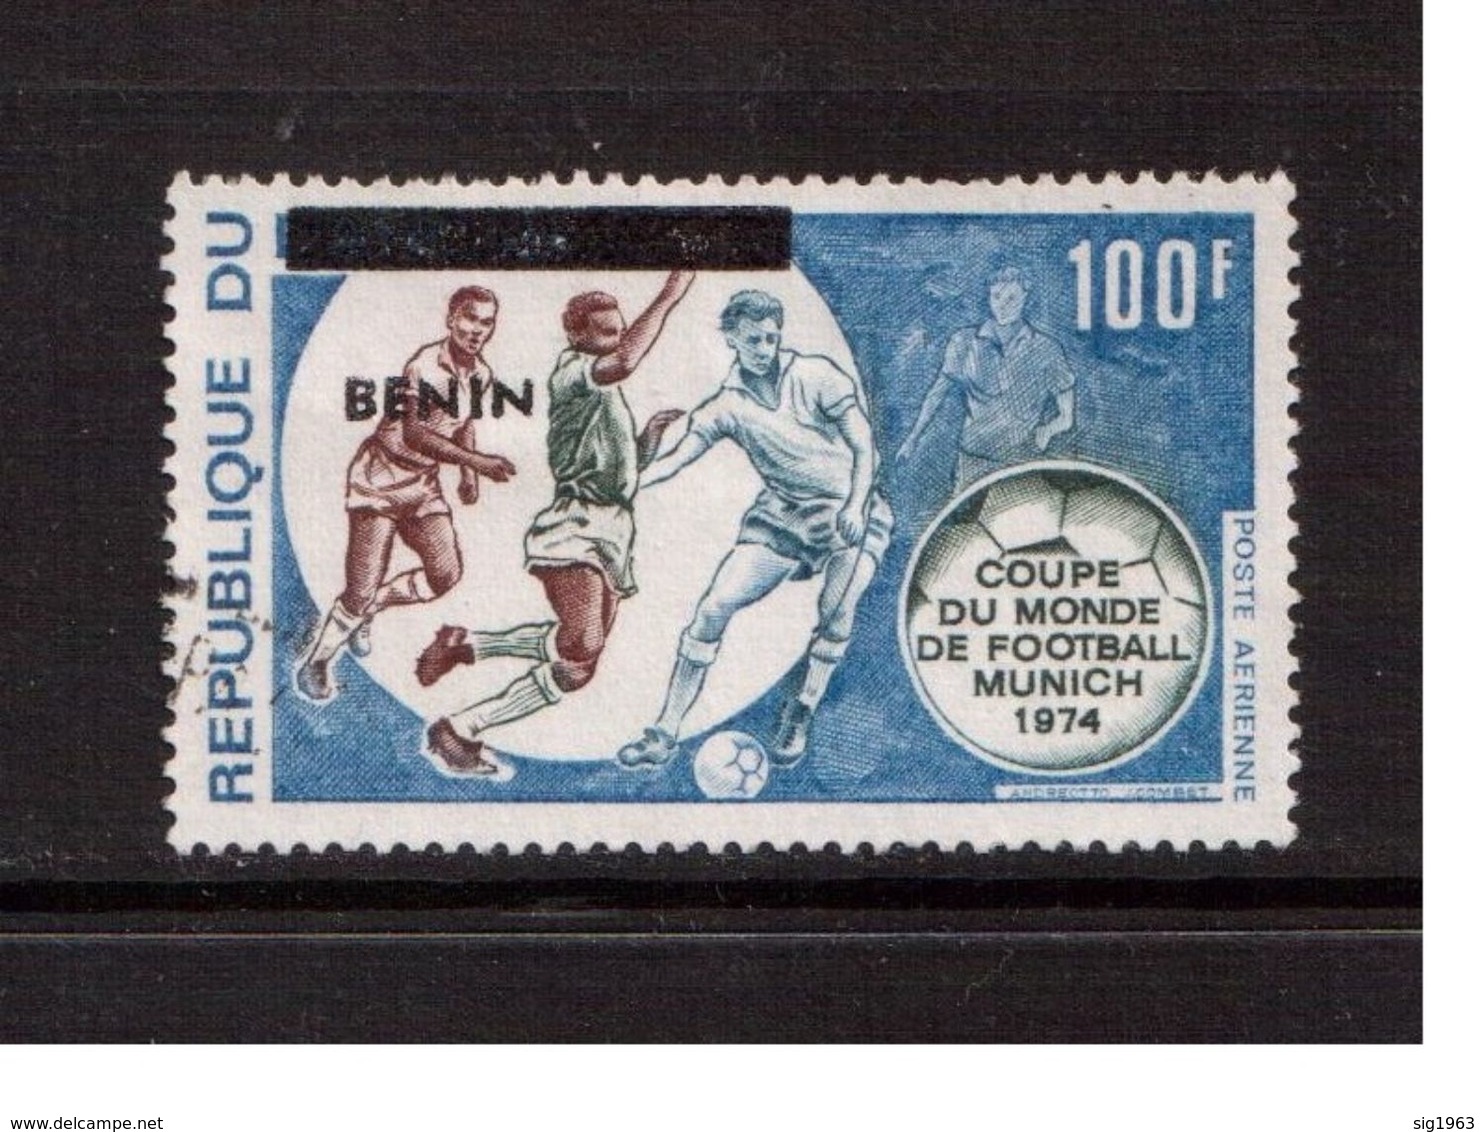 Benin-1992,(Mi.530),Football, Soccer, Fussball,calcio,Used, R - 1974 – Germania Ovest